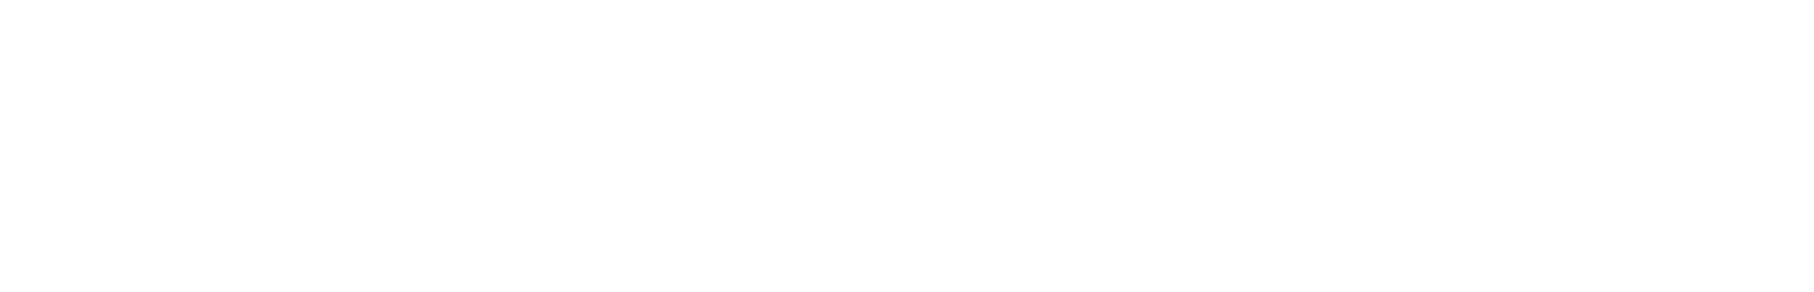 Logo Fanzoca